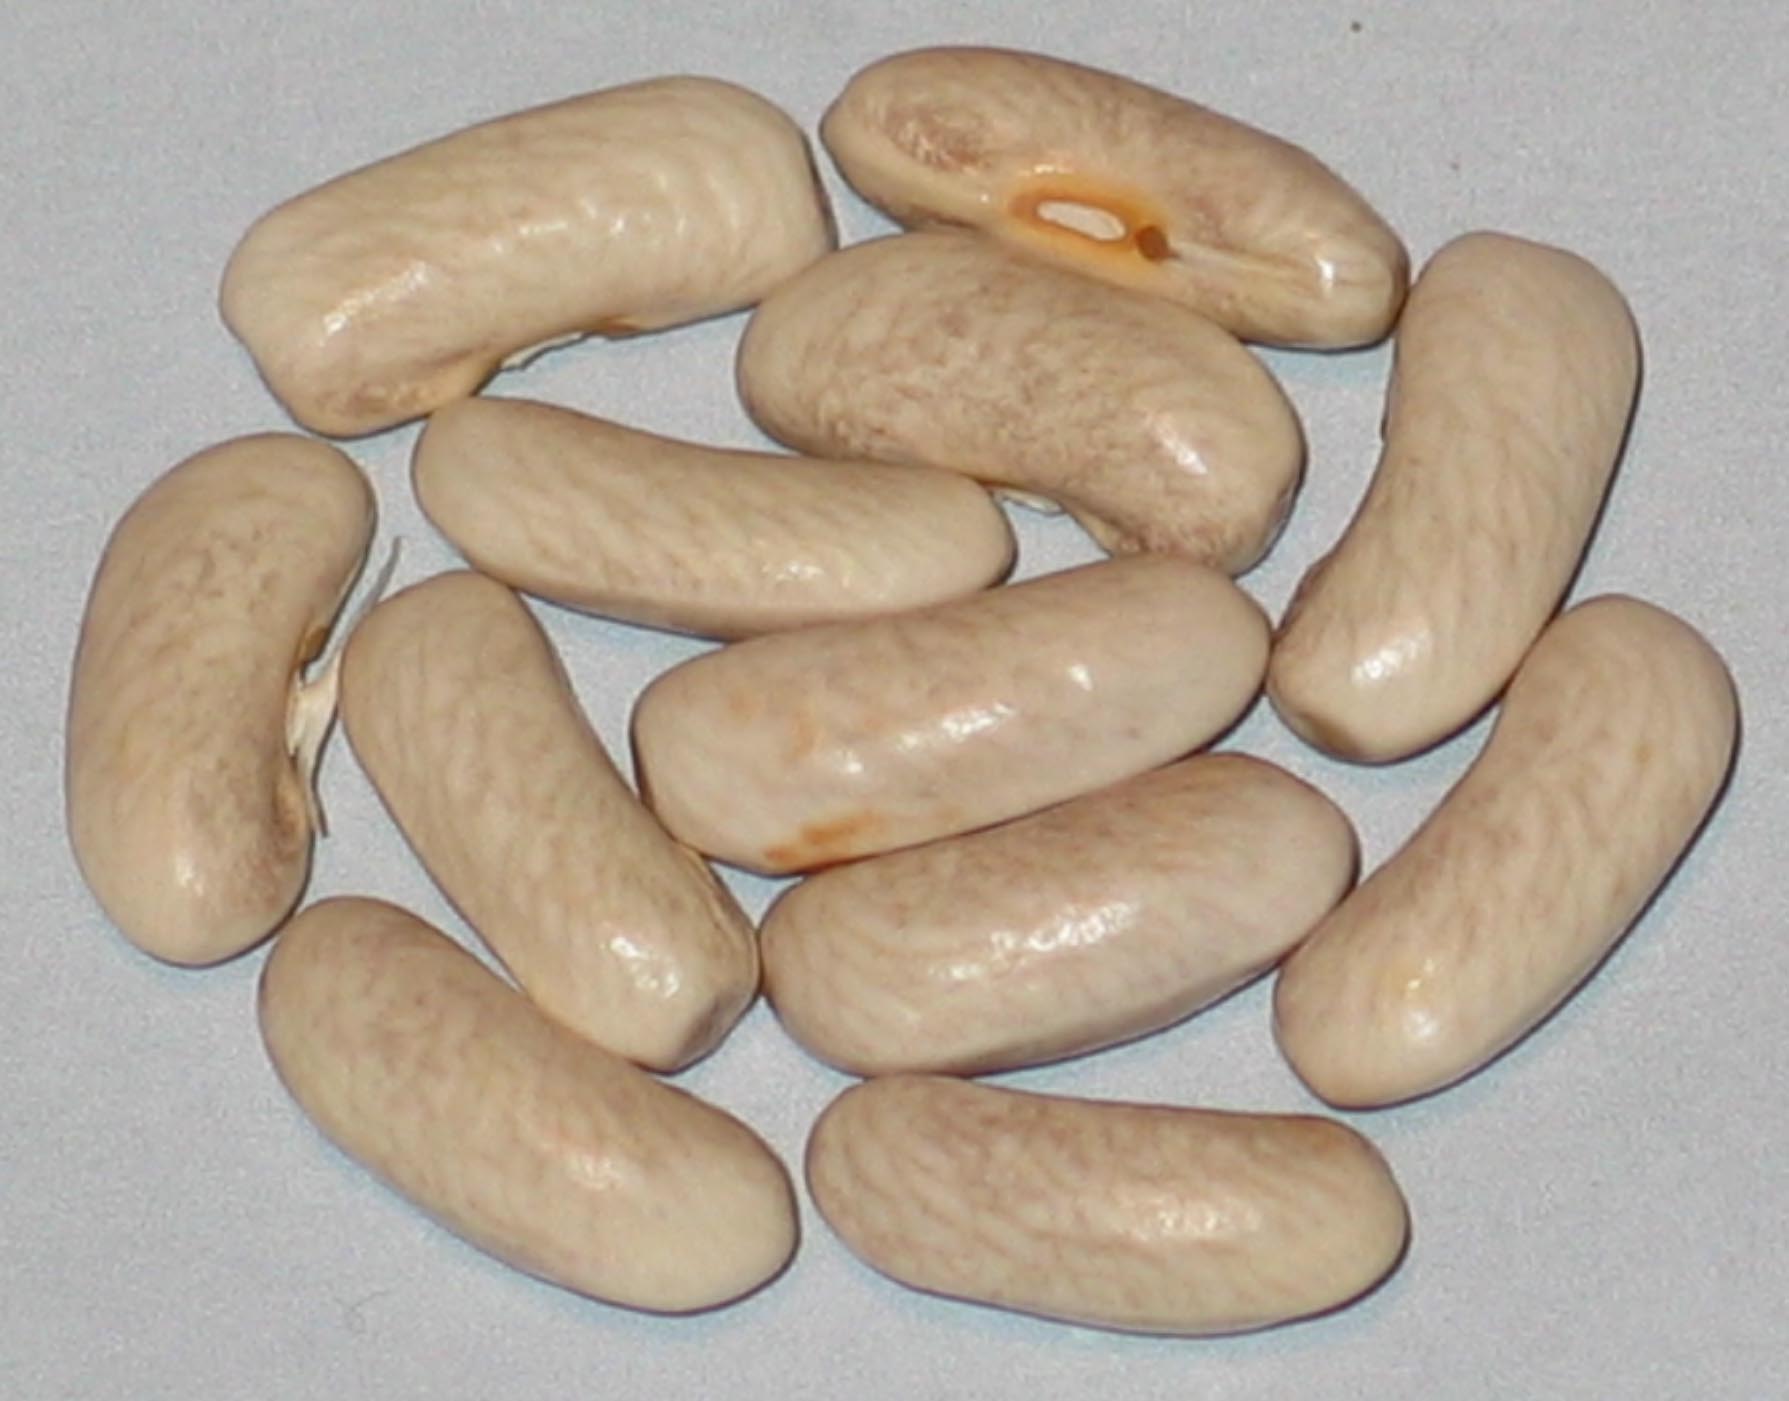 image of Robert's Green beans